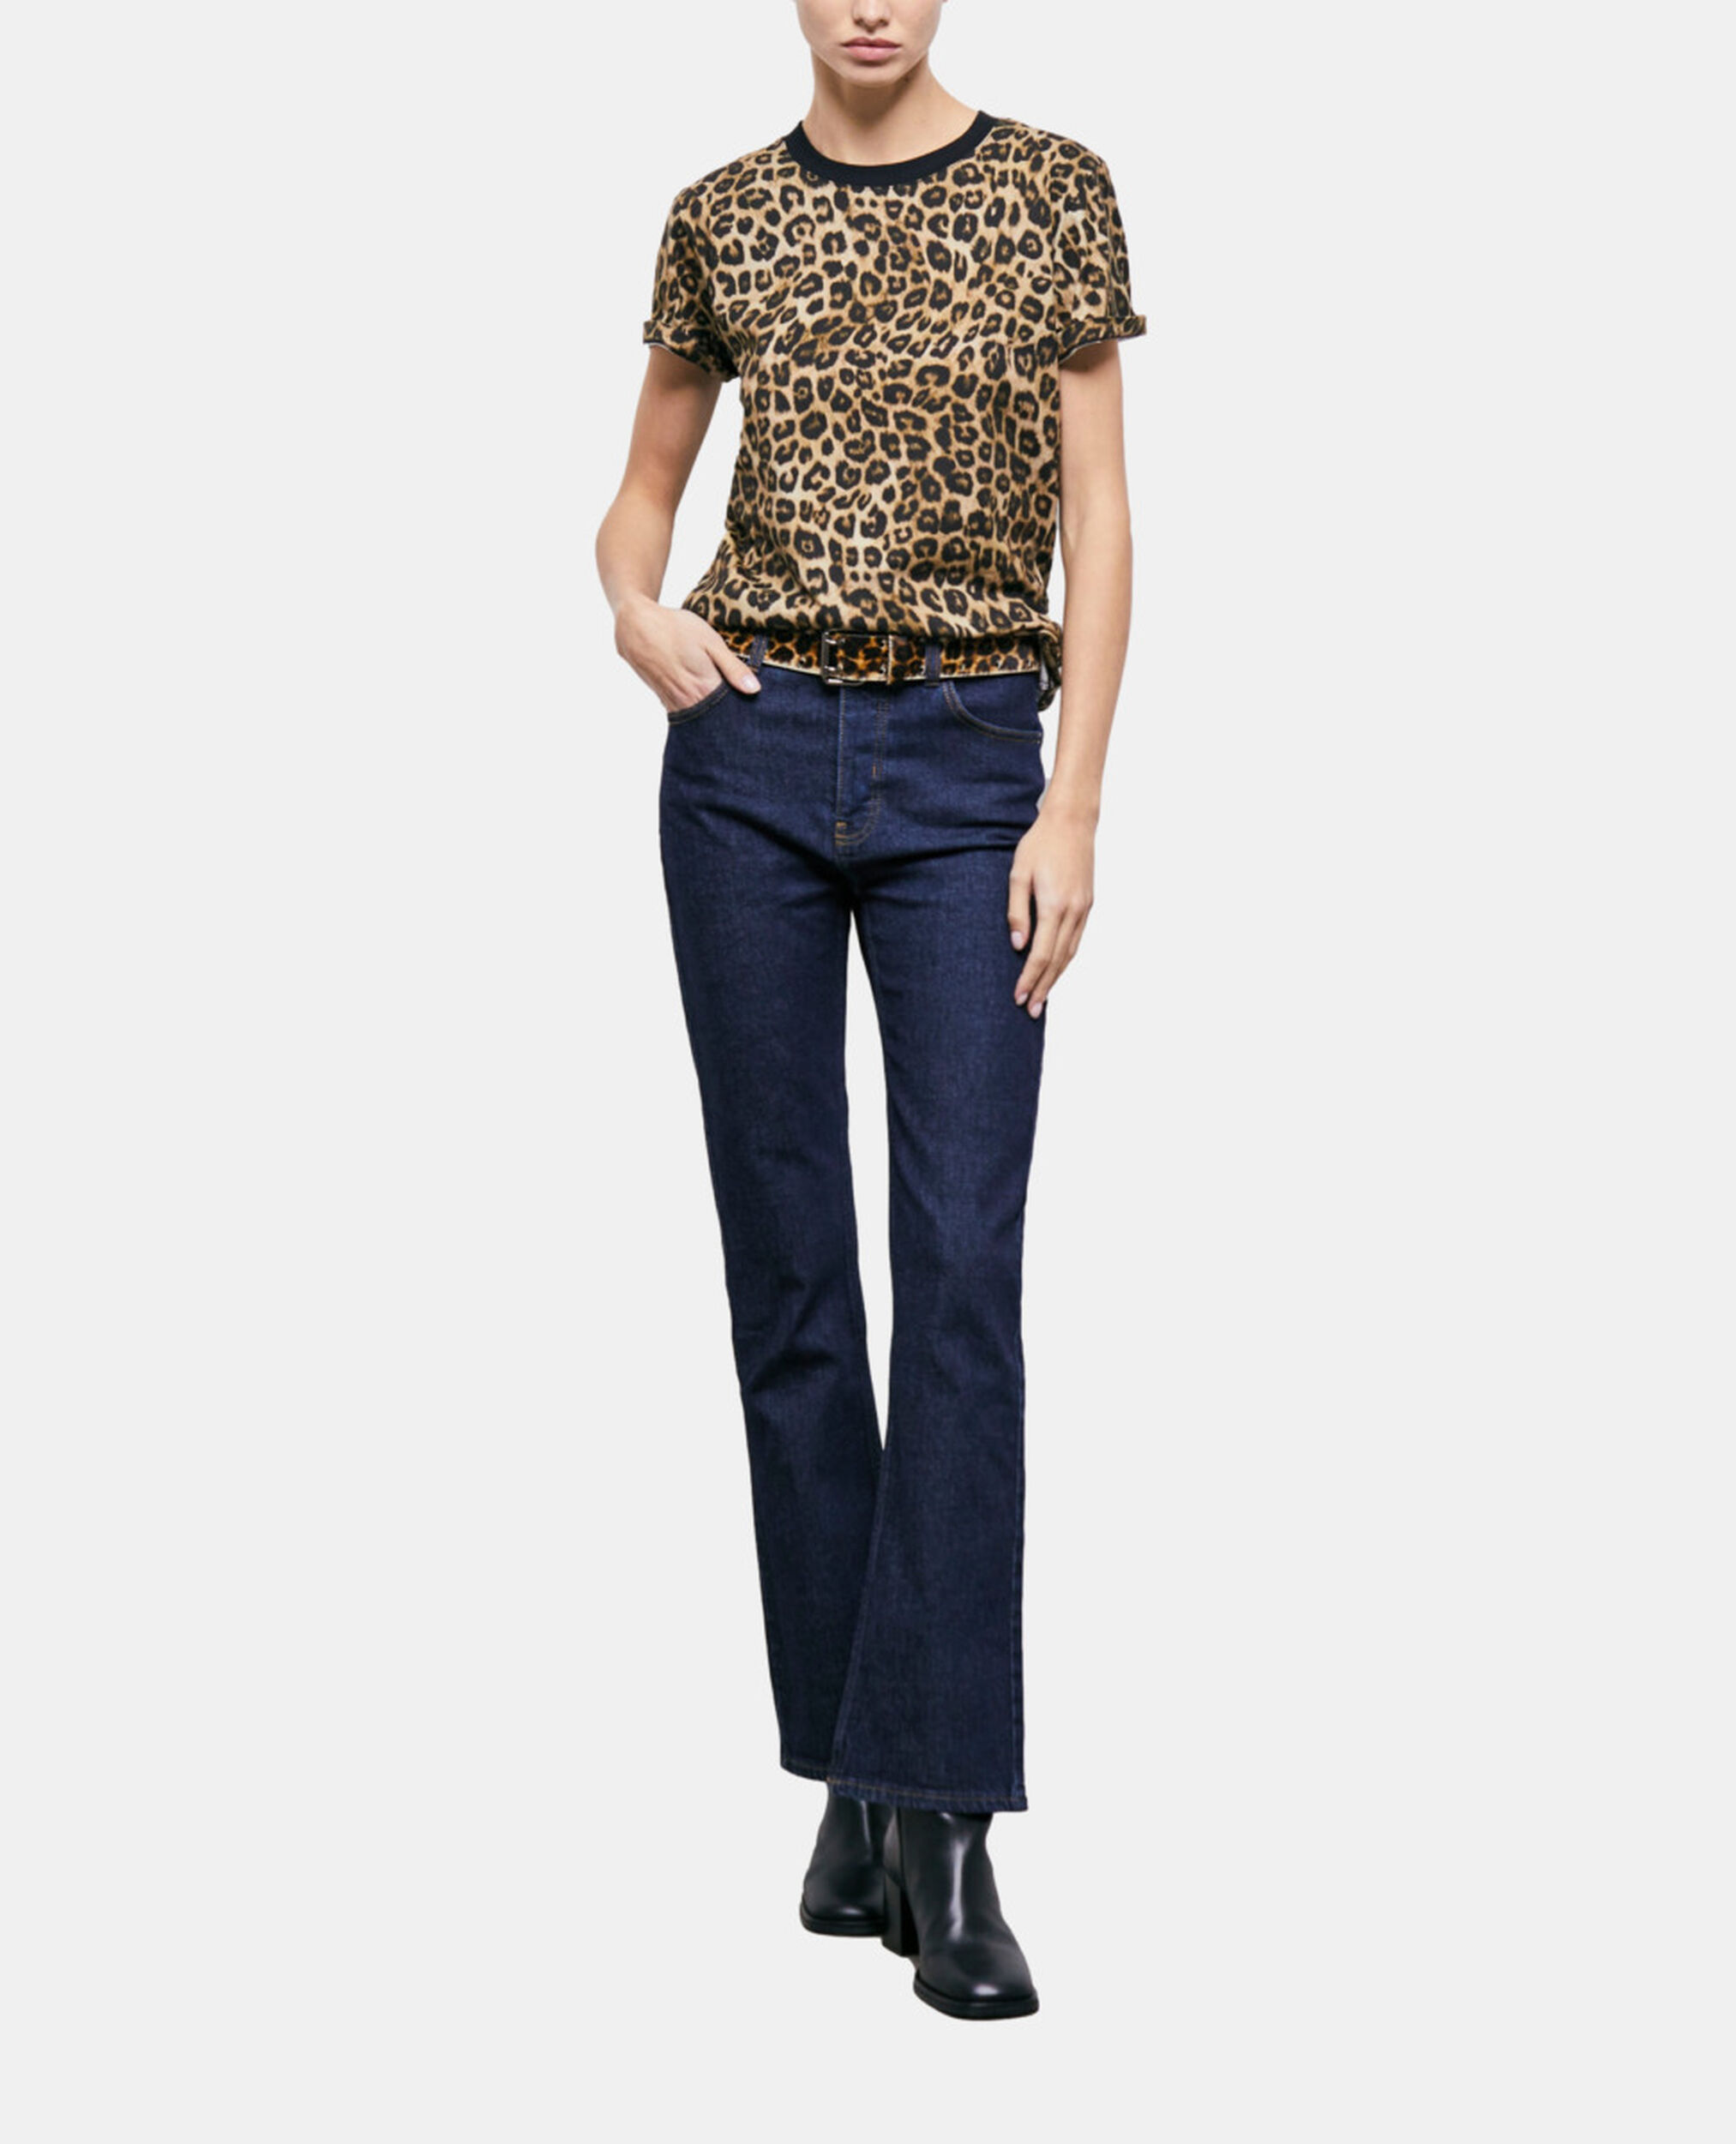 Women's leopard print t-shirt, LEOPARD, hi-res image number null